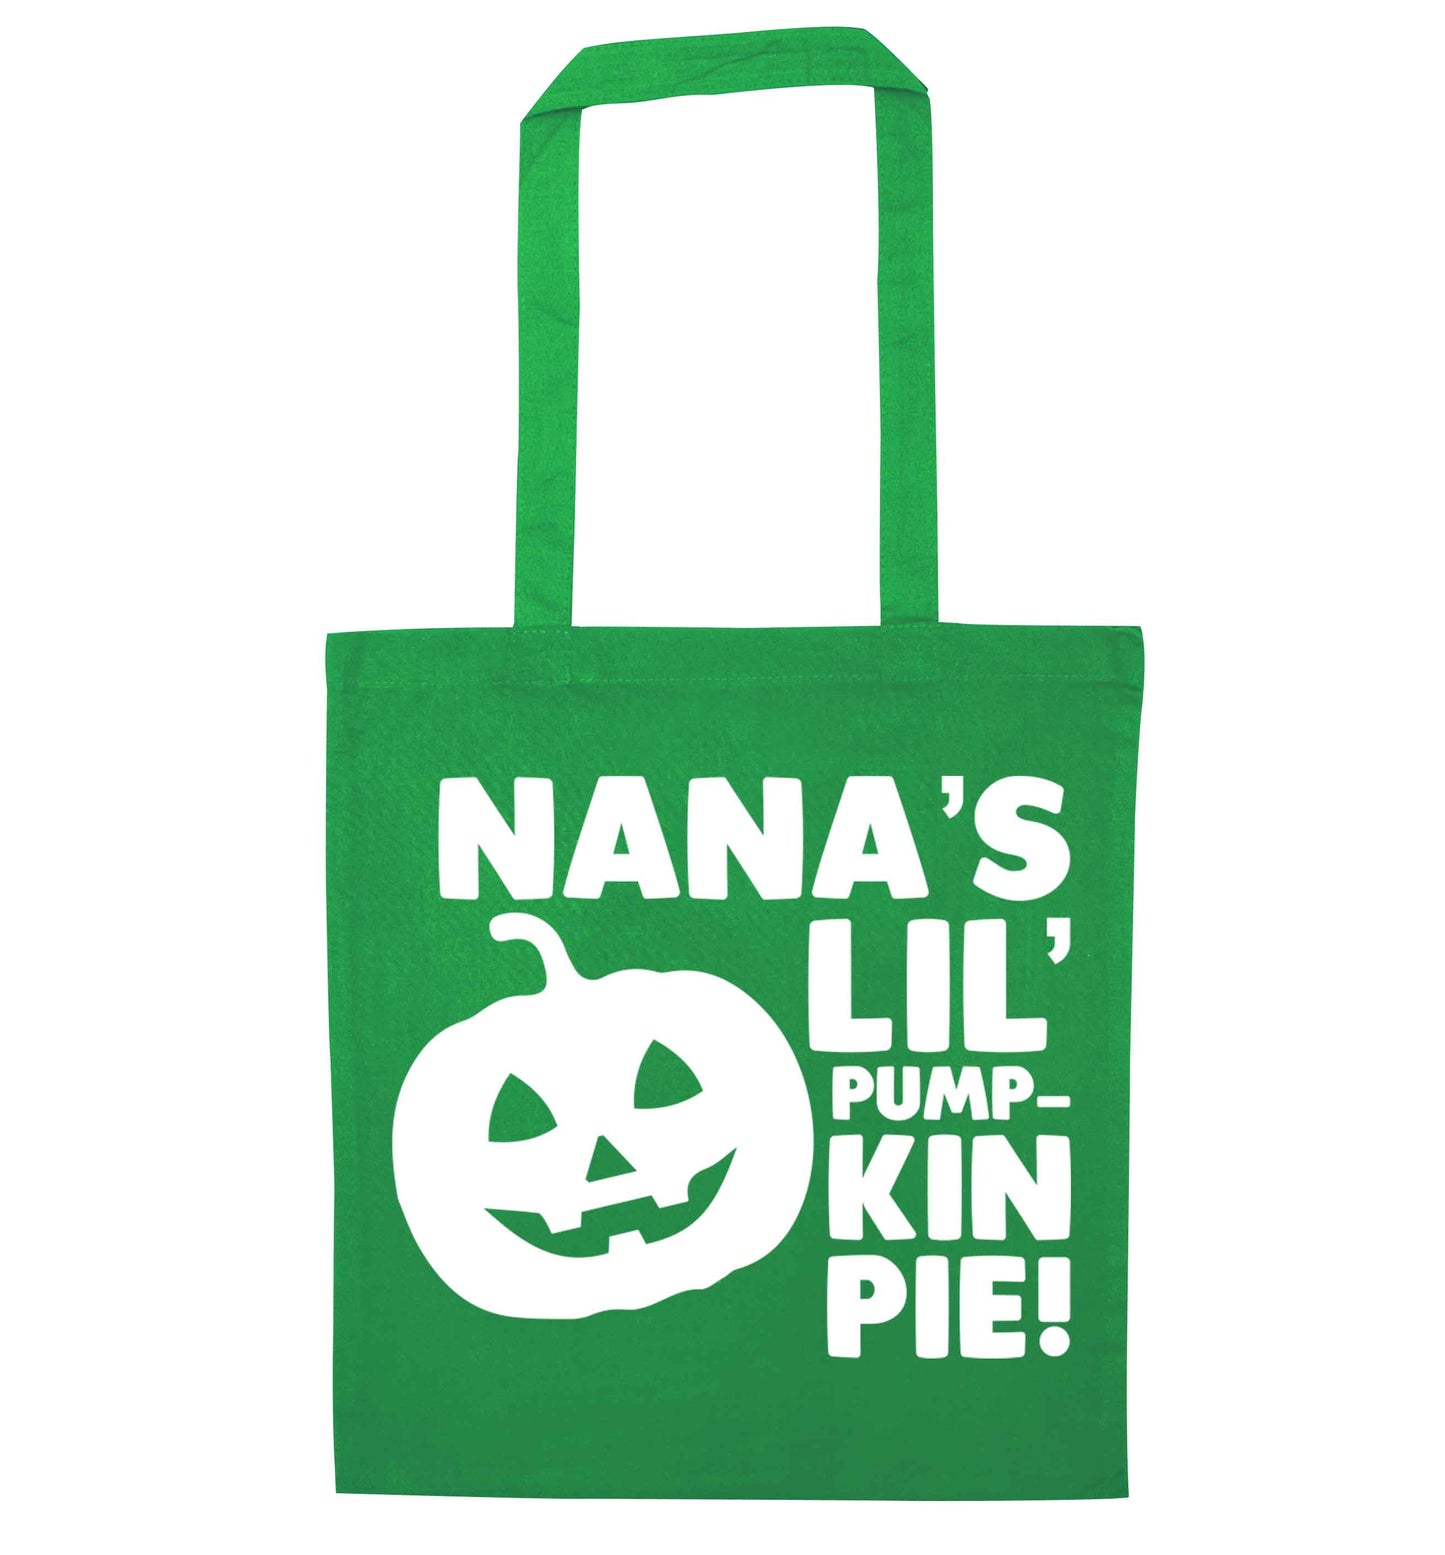 Nana's lil' pumpkin pie green tote bag